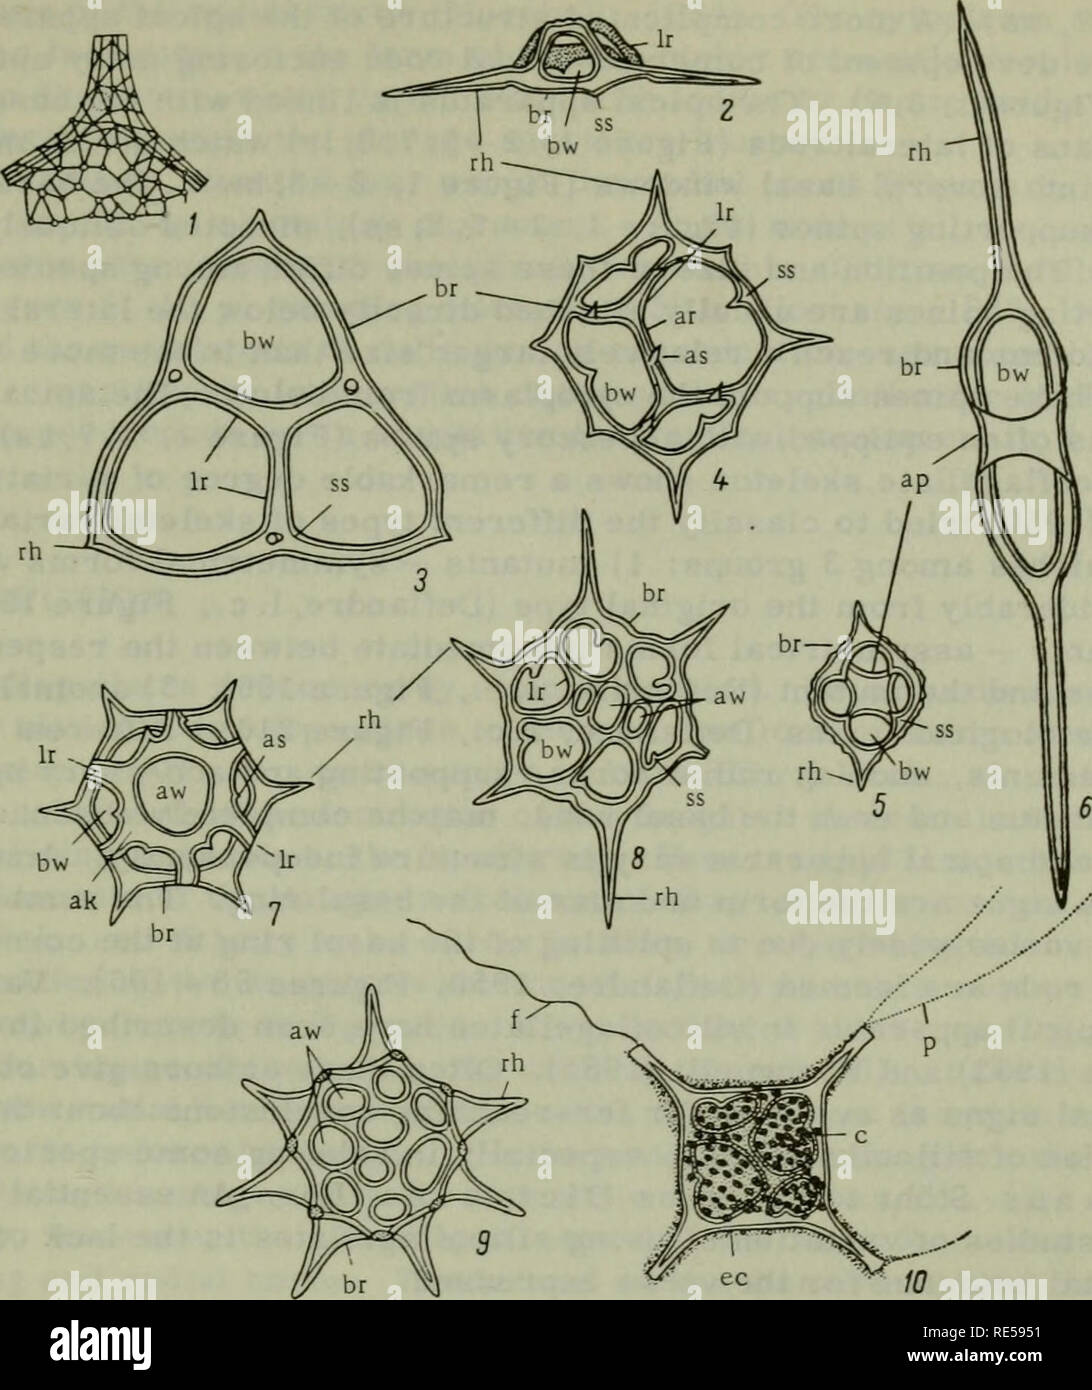 . Cryptogamic plants of the USSR. (Flora sporovykh rastenii SSSR). Plants. FIGURE 1. Nomenclature of the silicoflagellate skeleton: 1 —reticulate surface of silicoflagellate skeleton (detail) (Deflandre, 1950); 2 — Dictyocha fibula Ehr. var. fibula f. fibula (lateral view); 3 — D. tr i a - c an t ha var. a pic u 1 at a Lemm. f. apiculata (apical view); 4 — D. fibula var. aculeata Lemm. (apical view); 5—D. deflandrei var. bicornuta Gleser (ventral view); 6 —N a vi c u lopsi s biapiculata var. constricta (Schulz) Gleser (apical view); 7 —D ist e phan us spec ulu m (Ehr.) Hack. var. speculum (api Stock Photo